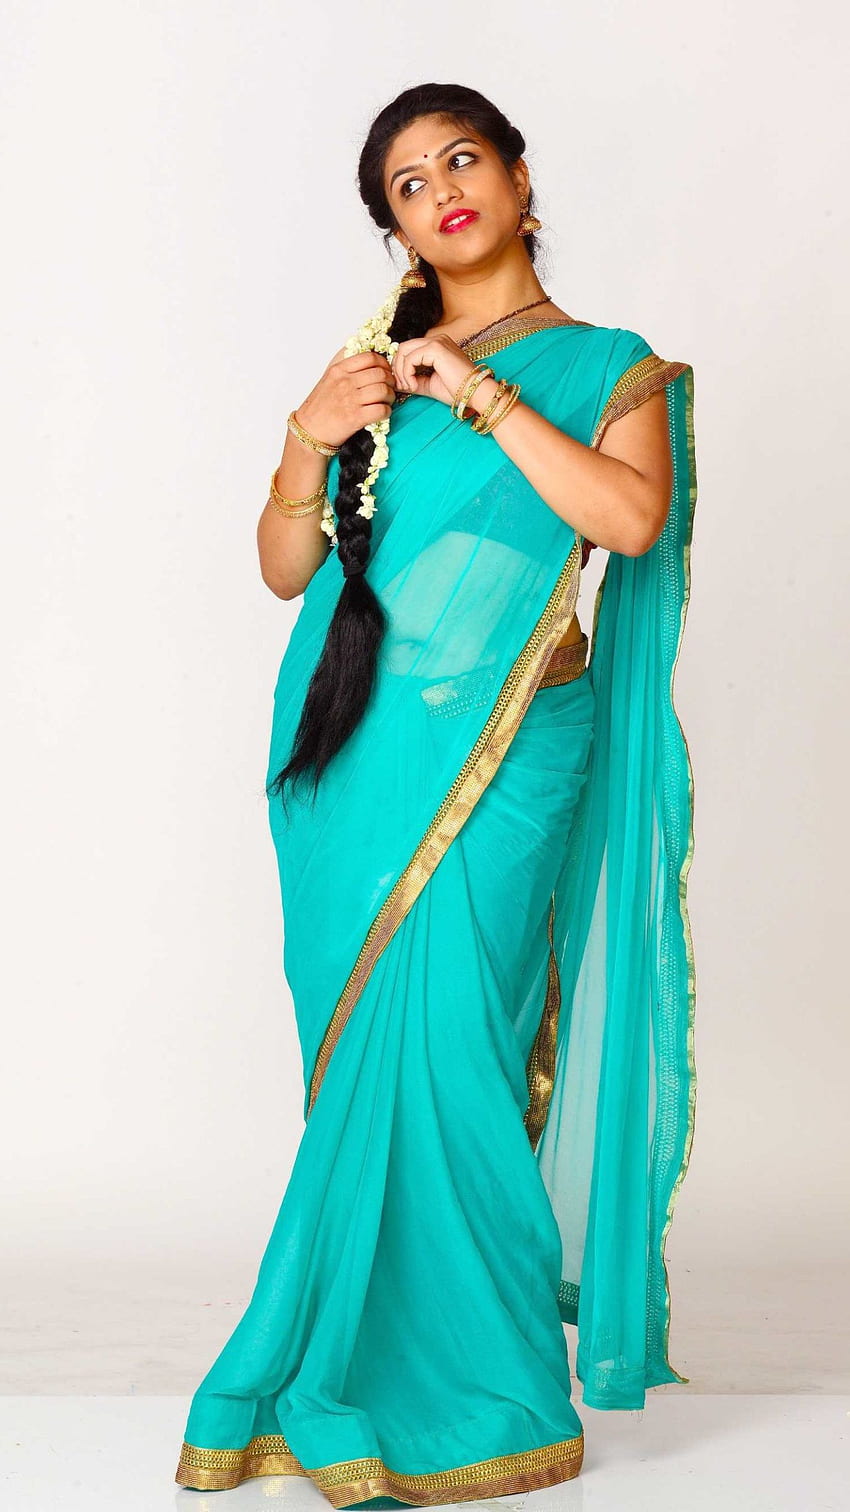 Supriya aysola, saree menggoda, aktris telugu wallpaper ponsel HD